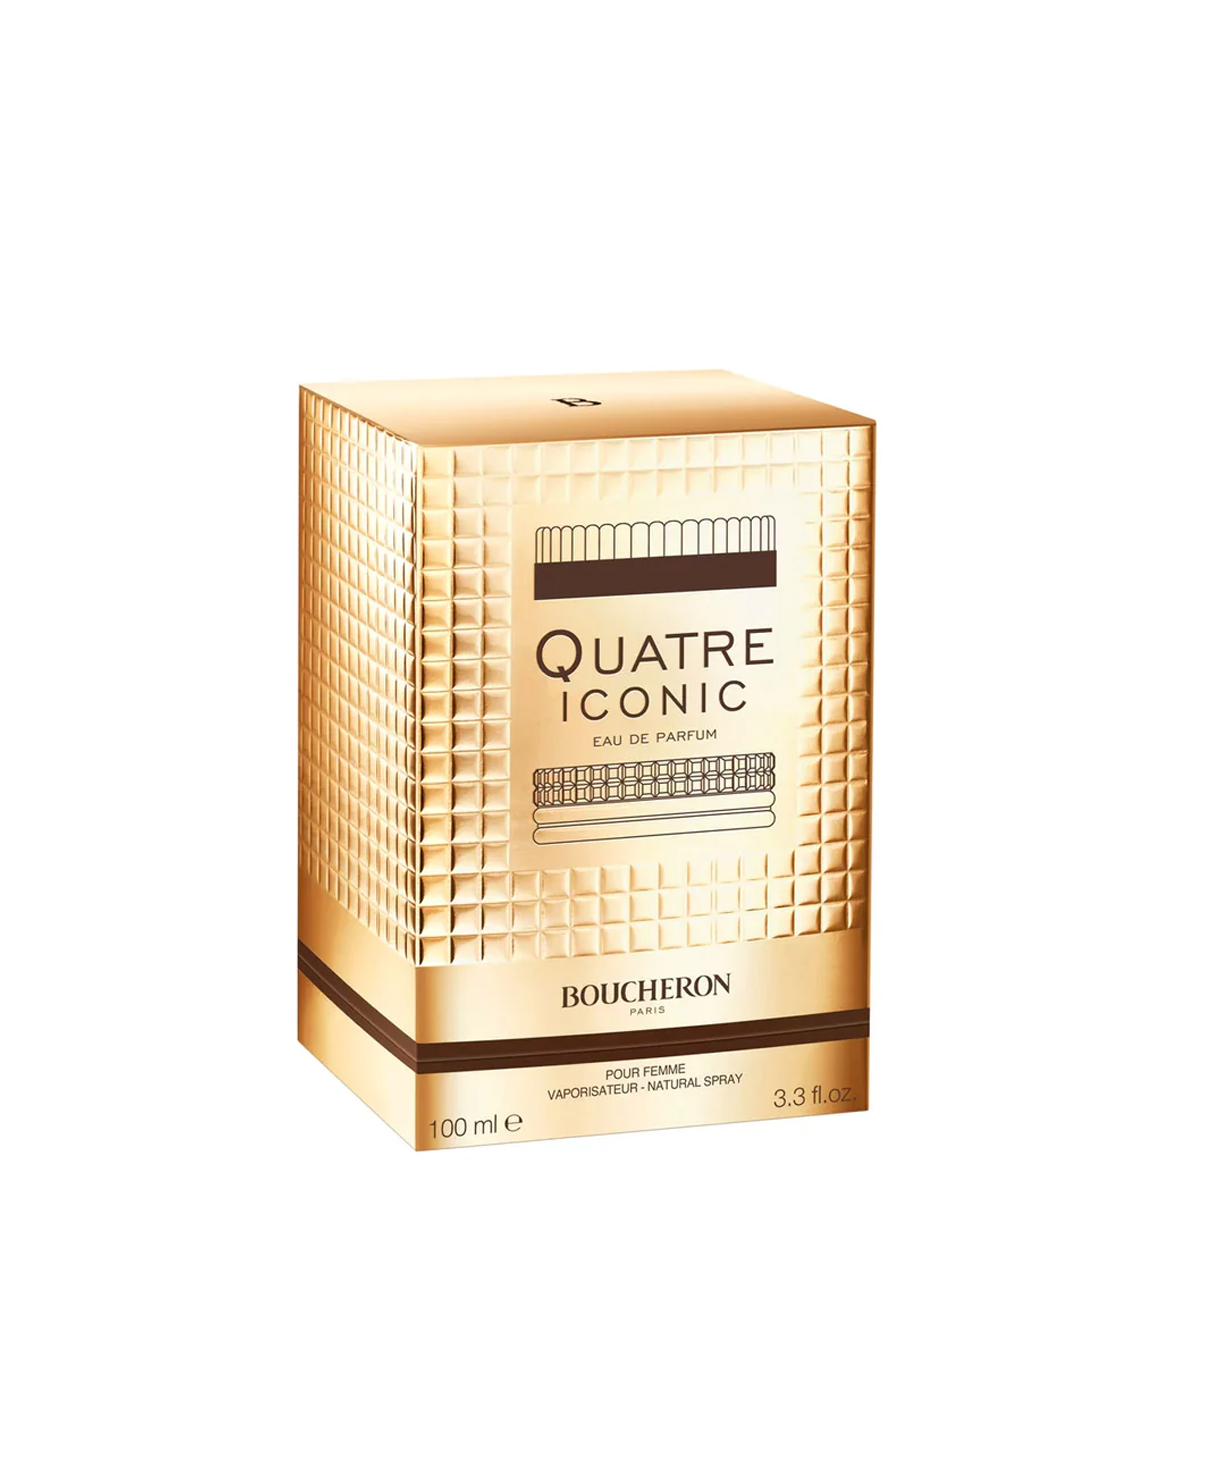 Perfume «Boucheron» Quatre Iconic, for women, 100 ml